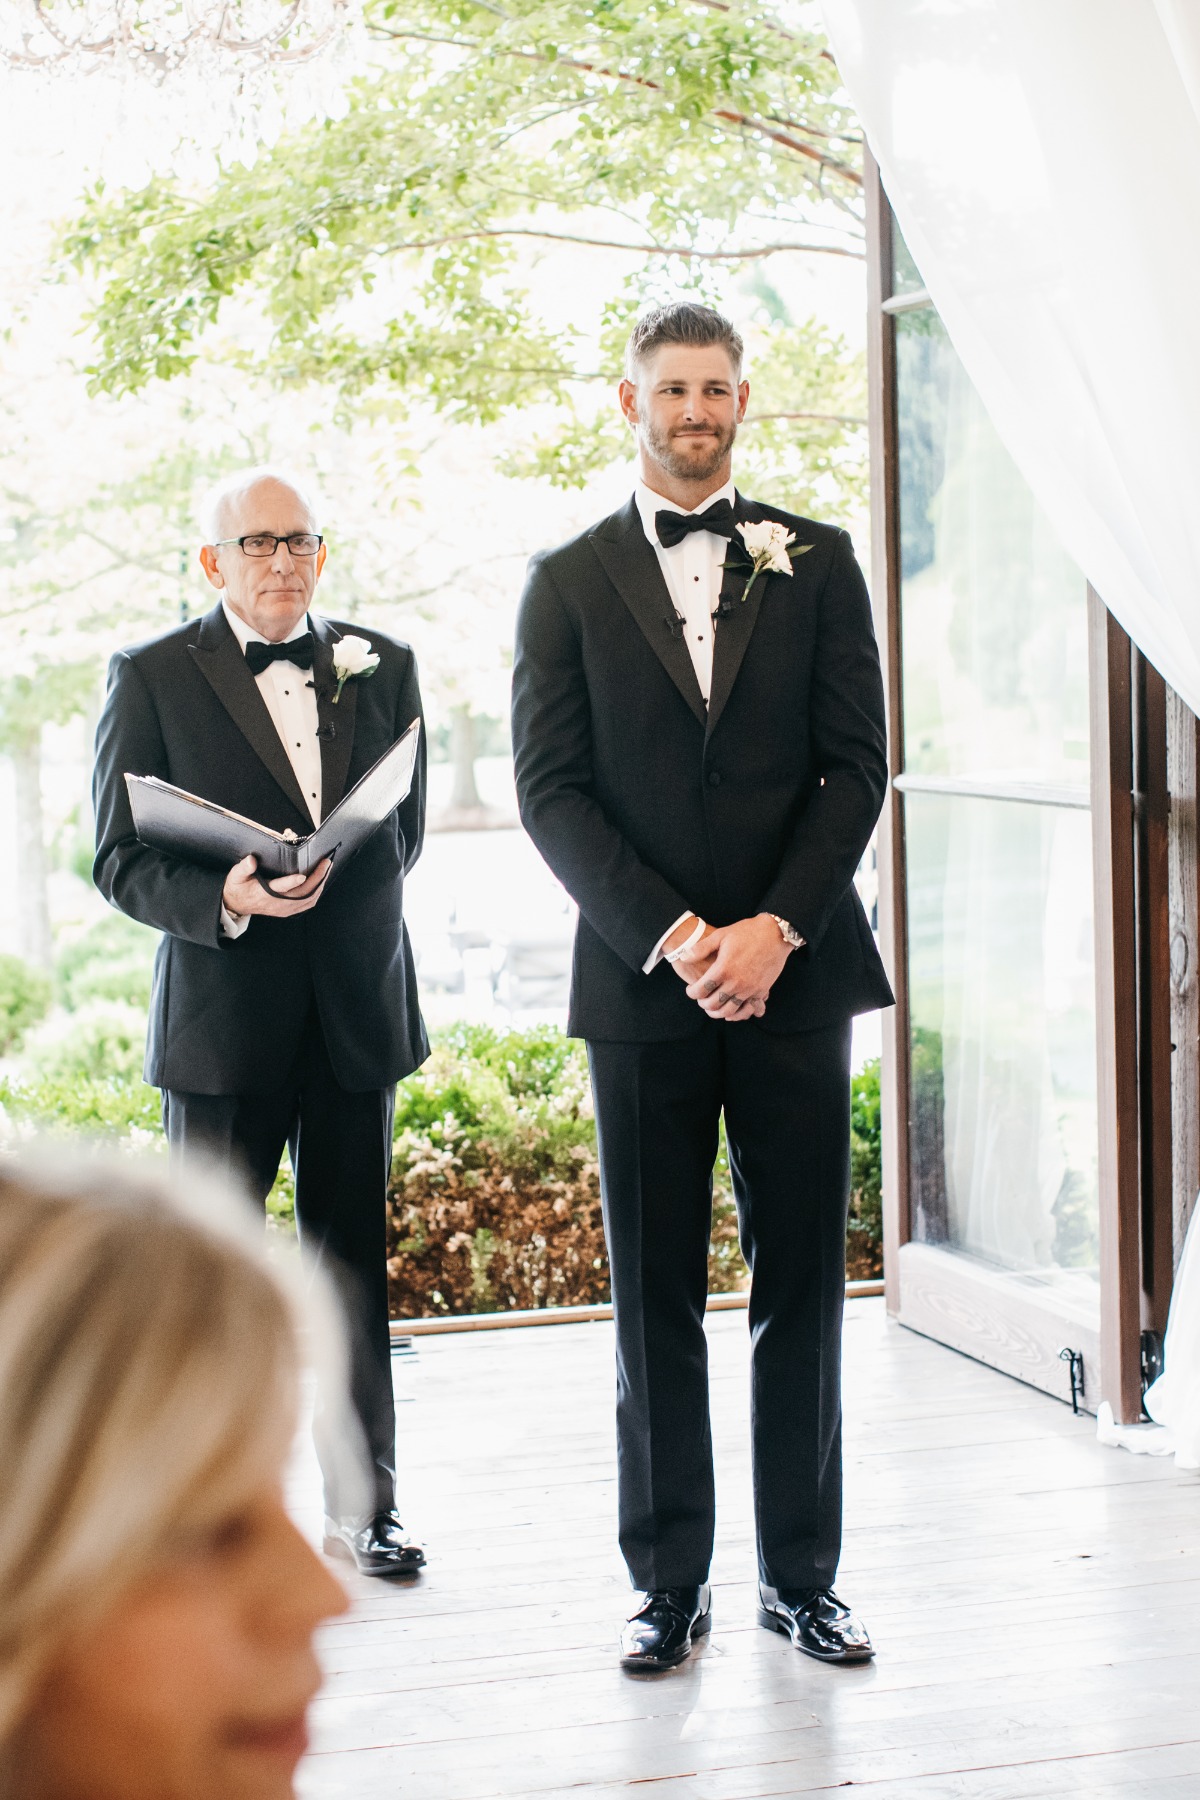 Austin Watson at his wedding ceremony in tuxedo